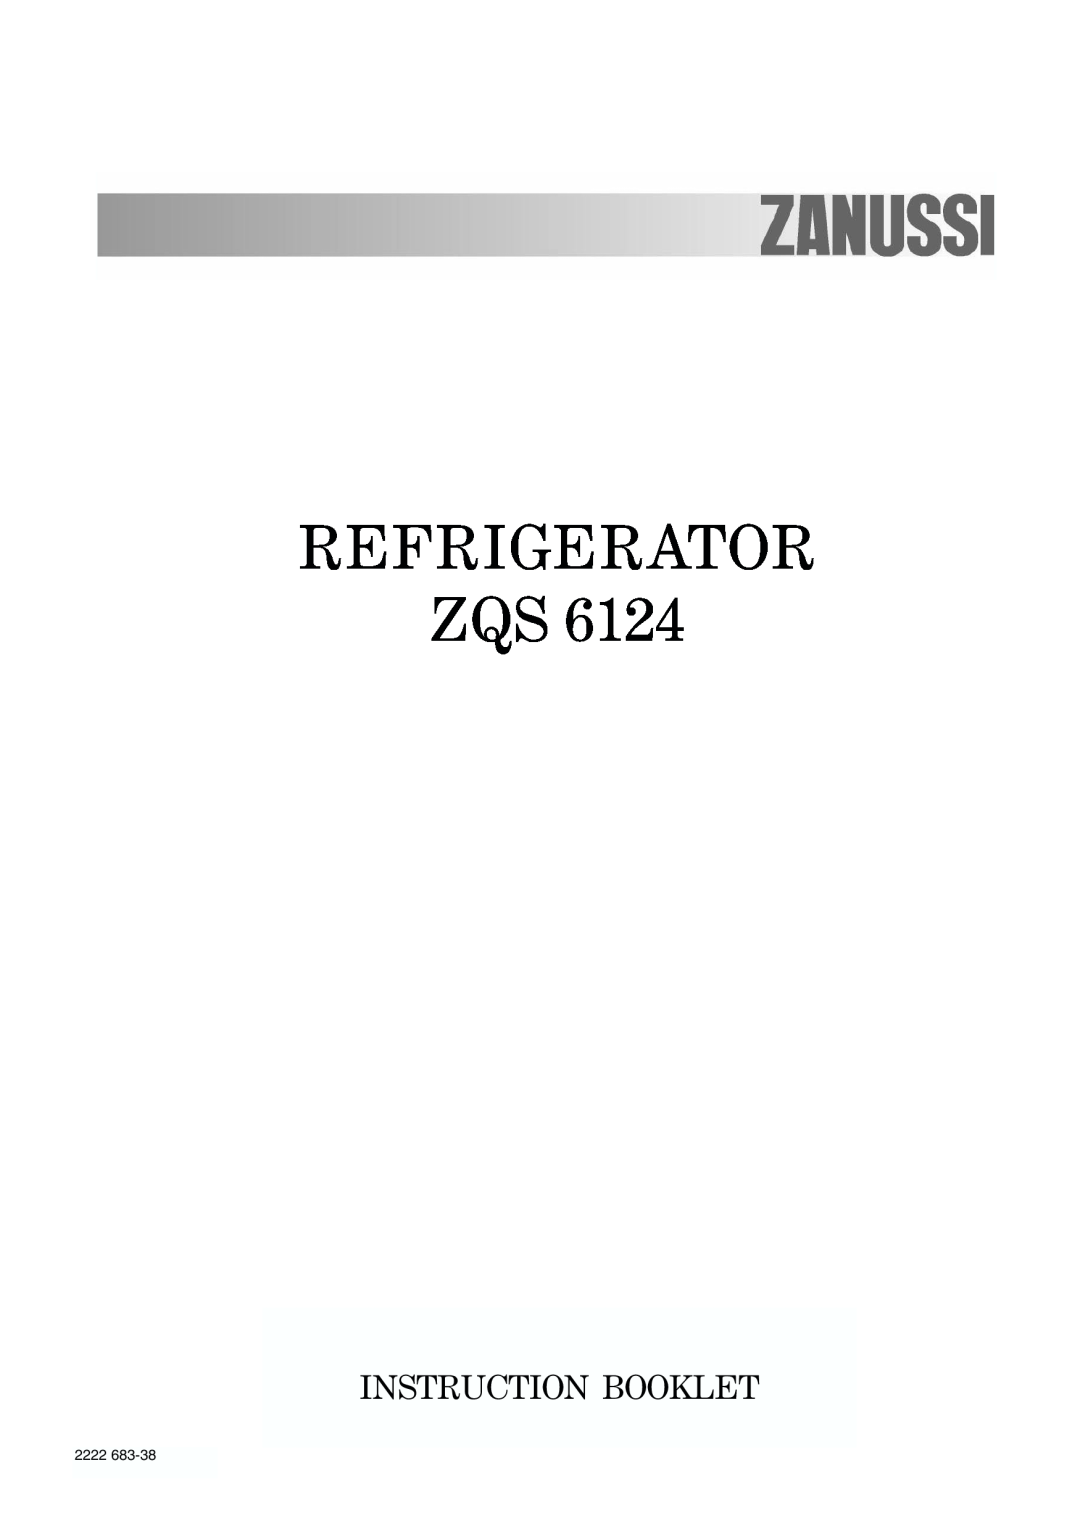 Zanussi ZQS 6124 manual Refrigerator Zqs, Instruction Booklet, 2222 